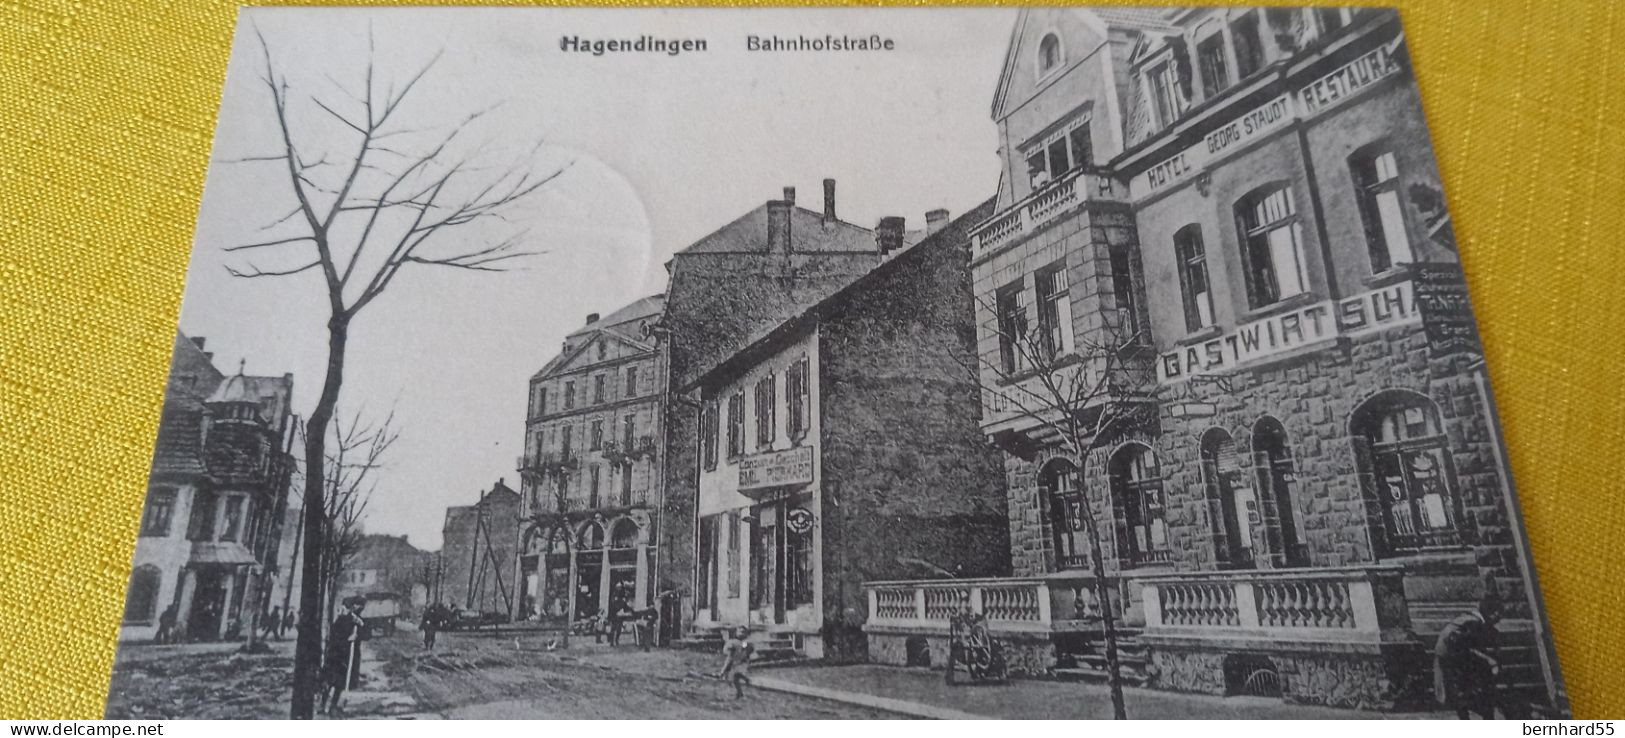 Hagendingen - Hagondange  S/w  Postalisch Gelaufen 1916 Bahnhofstraße  Hotel Georg Staudt - Hagondange